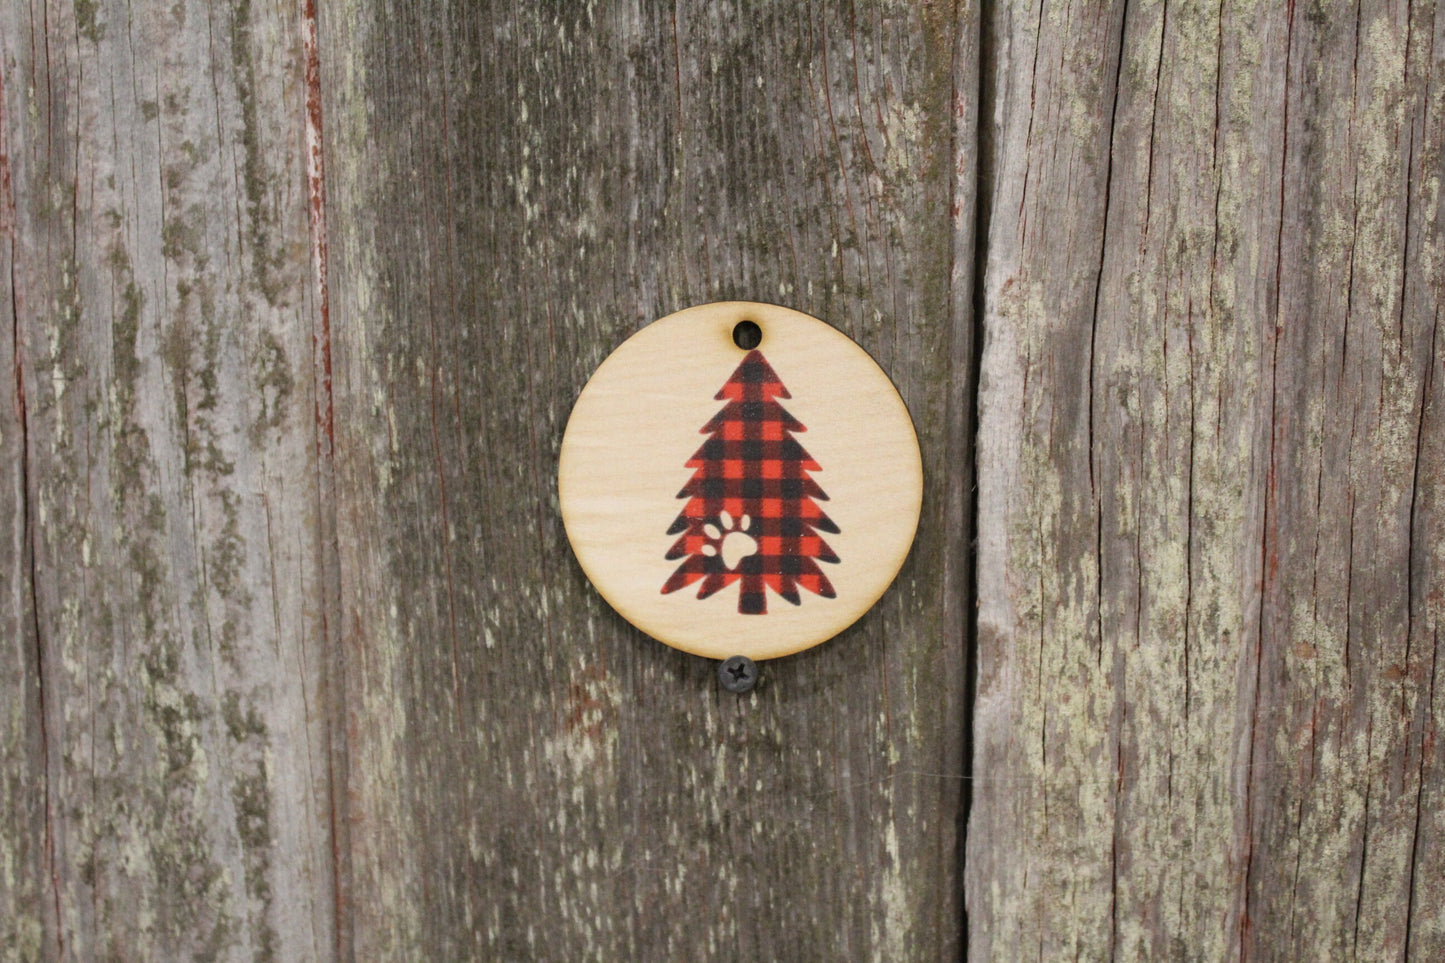 Pet Christmas Ornament Paw Print Buffalo Check Plaid Christmas Tree Keychain Gift Tag Woodslice Round